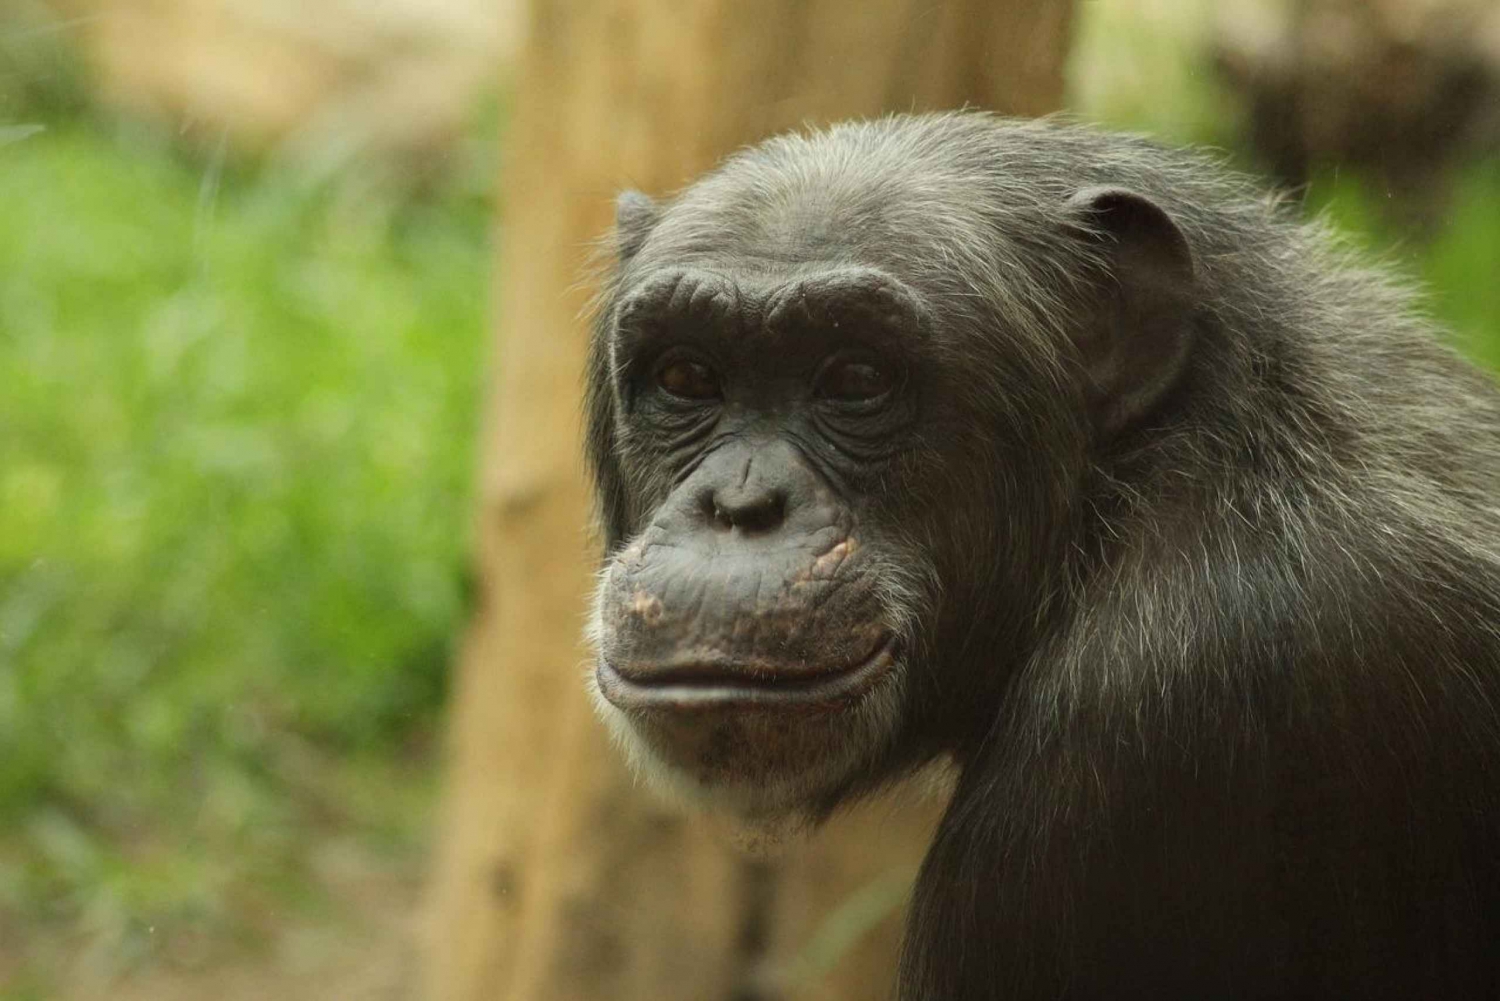 5-DAYS Best Chimpanzees Safari in Gombe Np Tanzania.